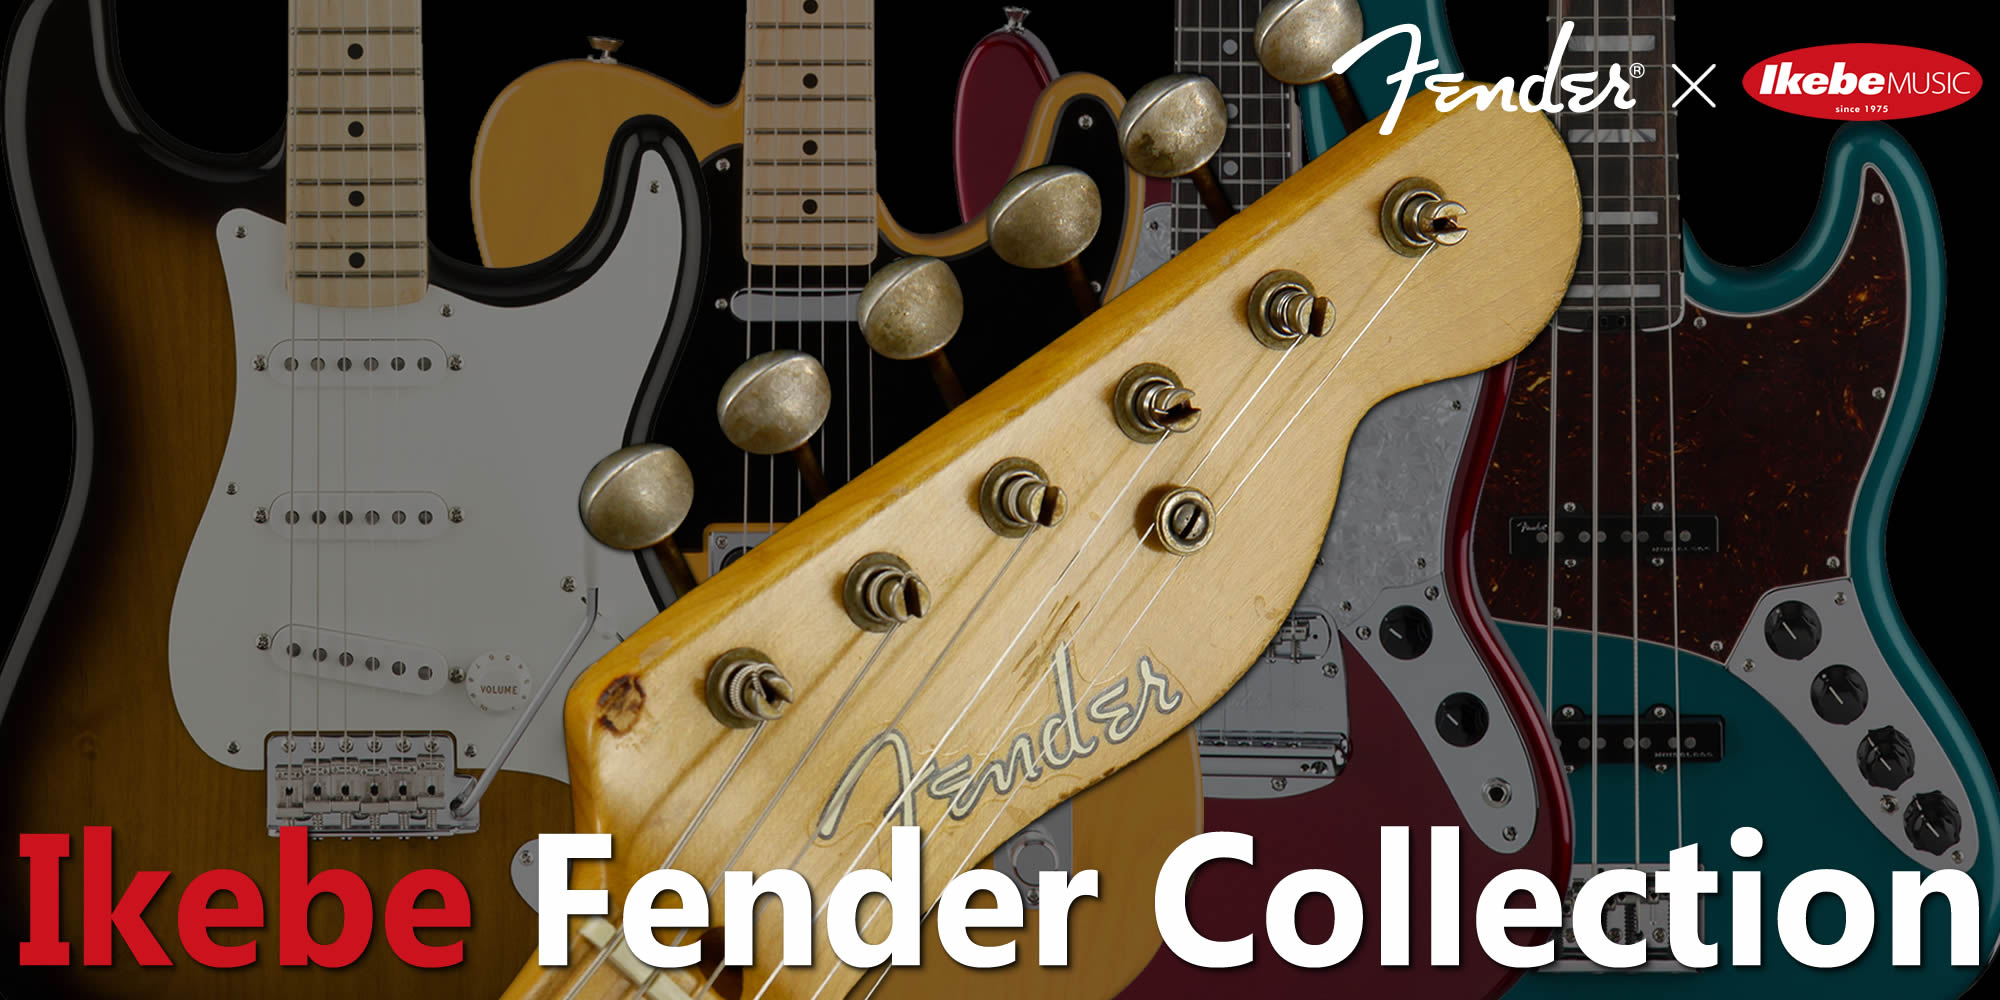 Fender 演奏の技術レベルが著しく向上している現代のプレーヤーに最高峰のプレイアビリティとトーンを提供するために開発されたメイドインジャパンの新シリーズ Modern 登場 こちらイケベ新製品情報局